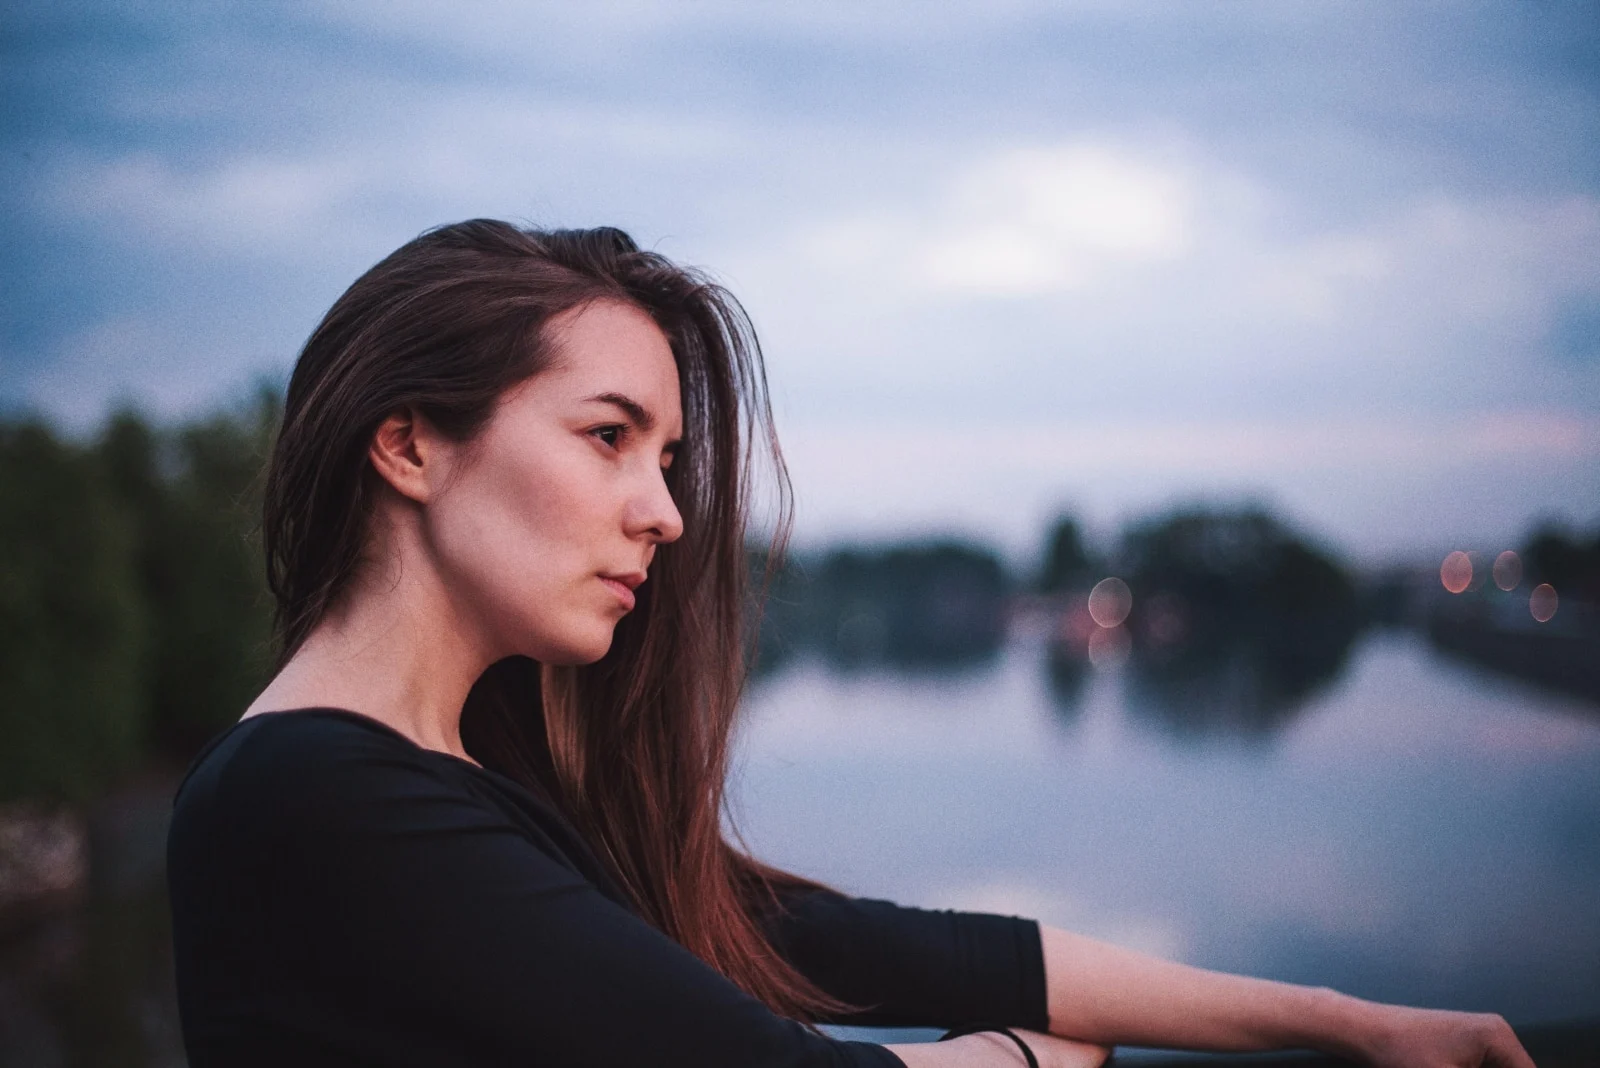 pensive woman in black top standing near water